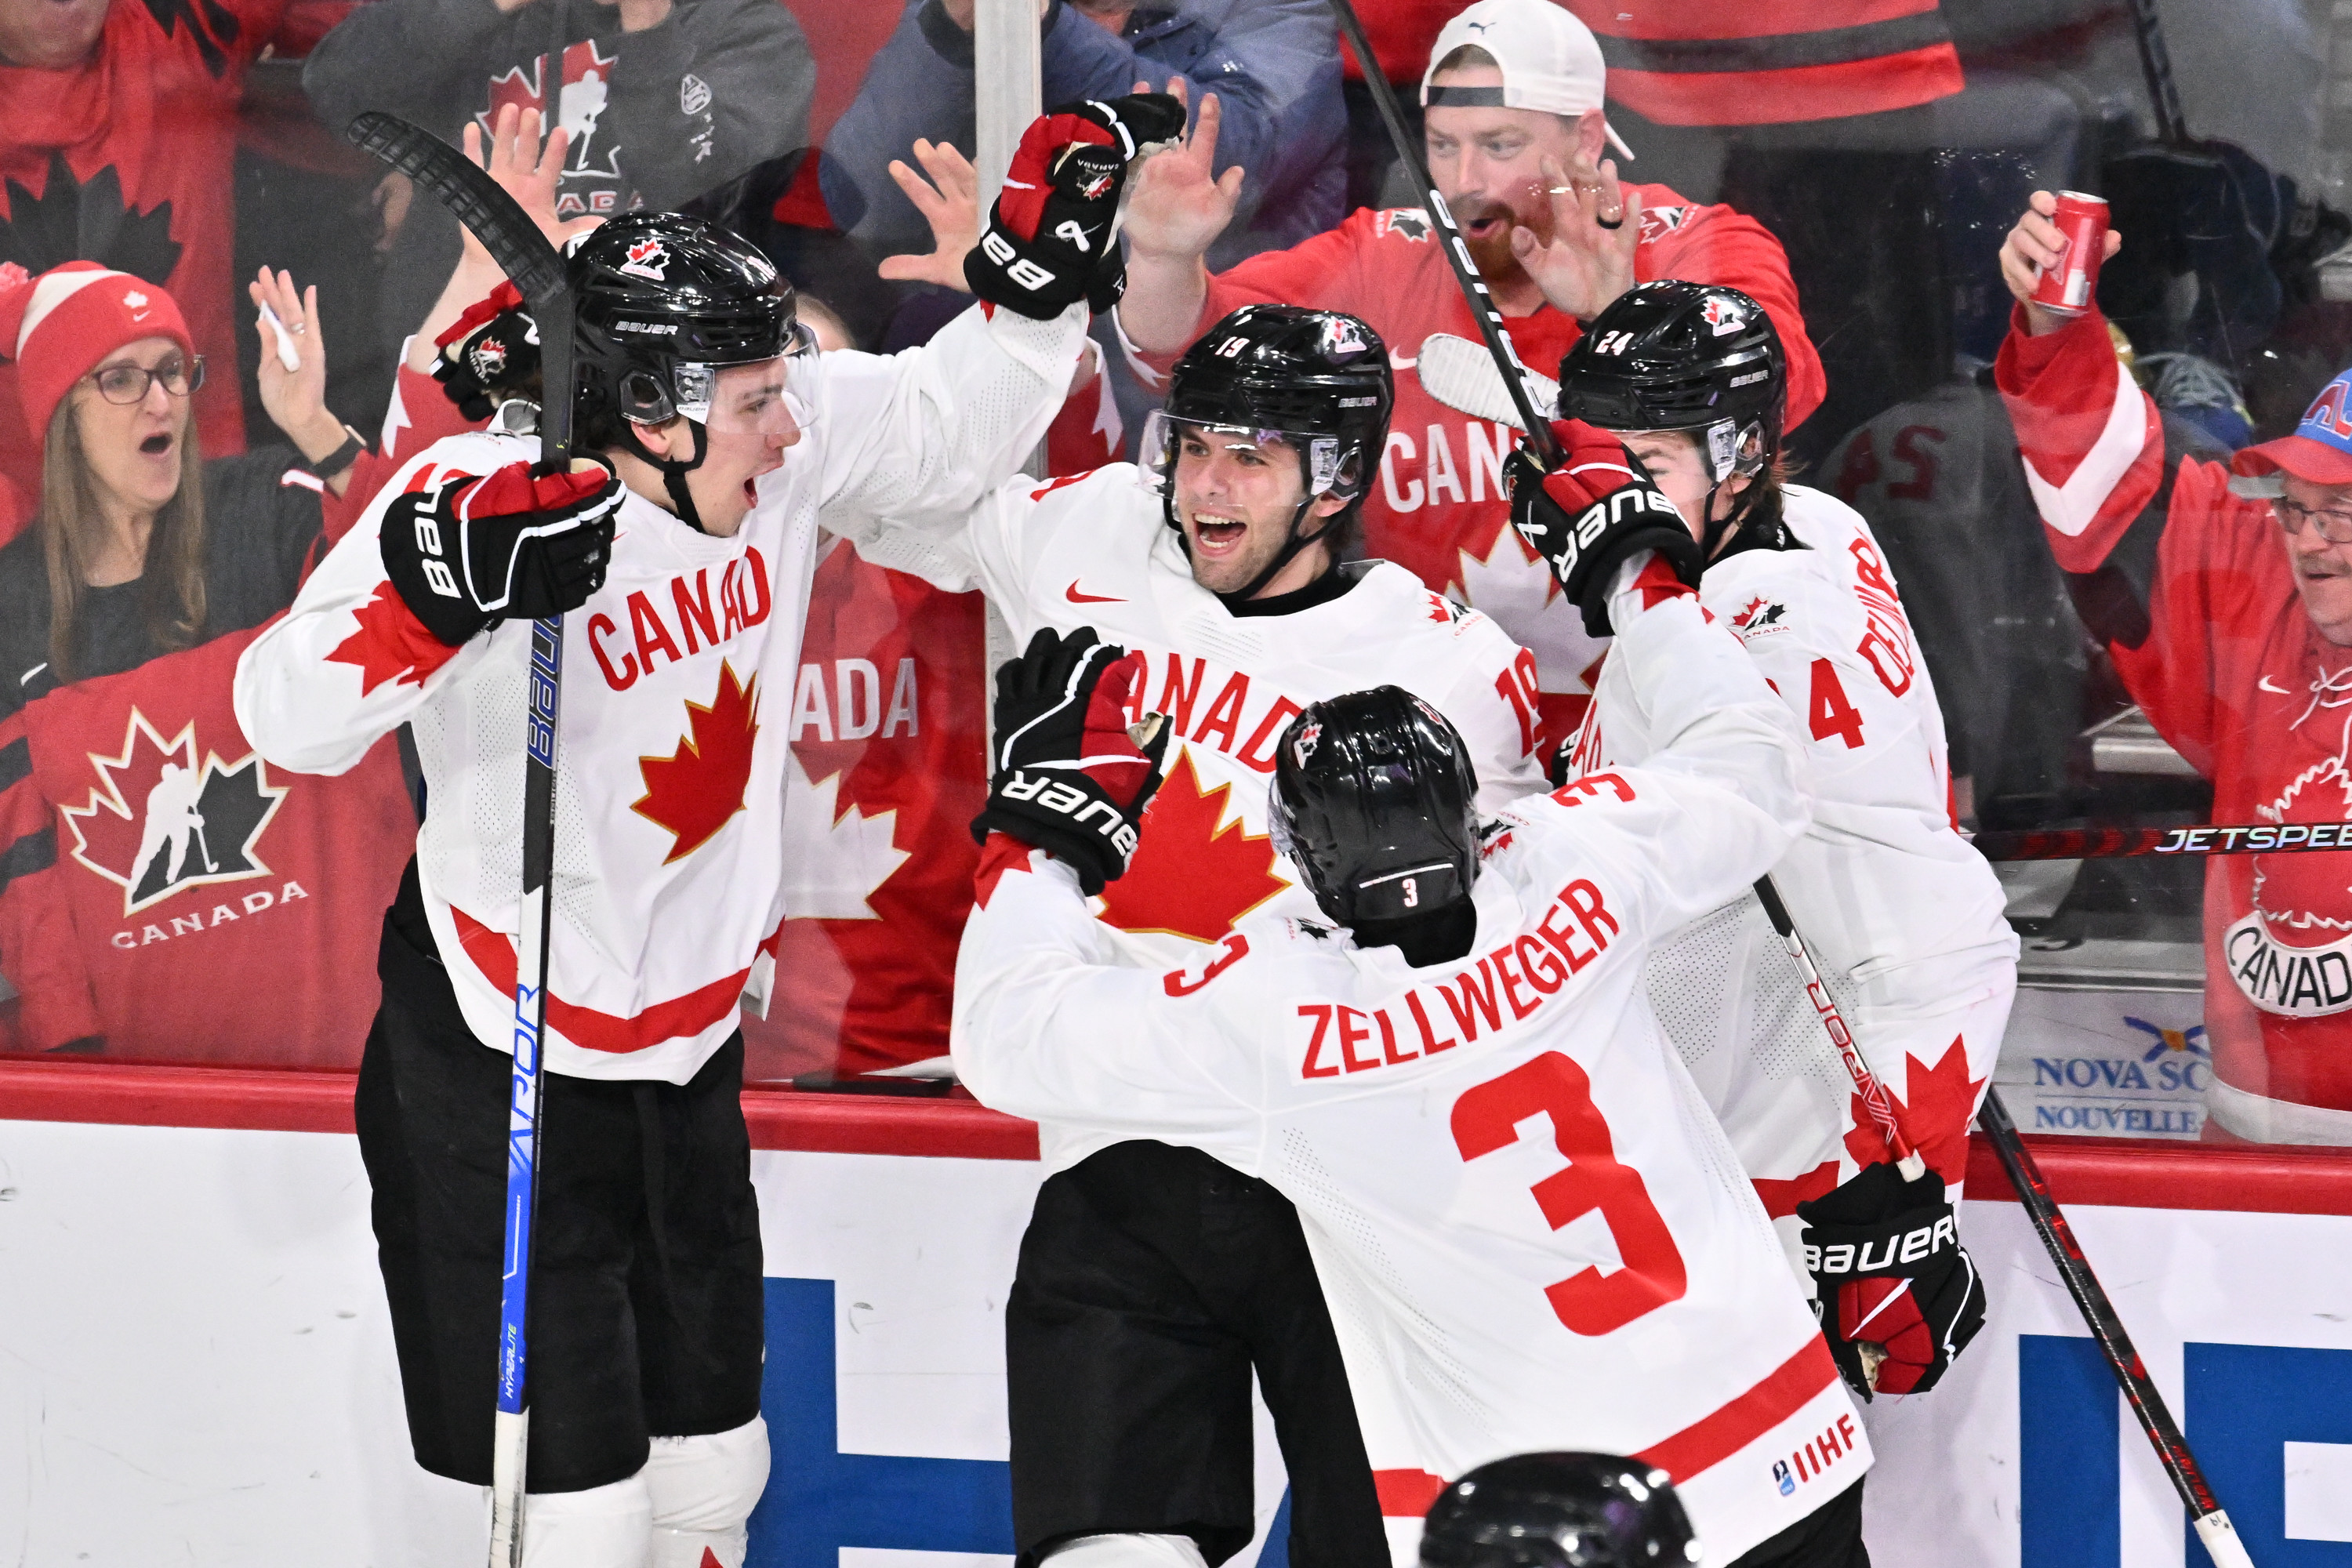 U.S. beats Canada to capture gold at world junior hockey